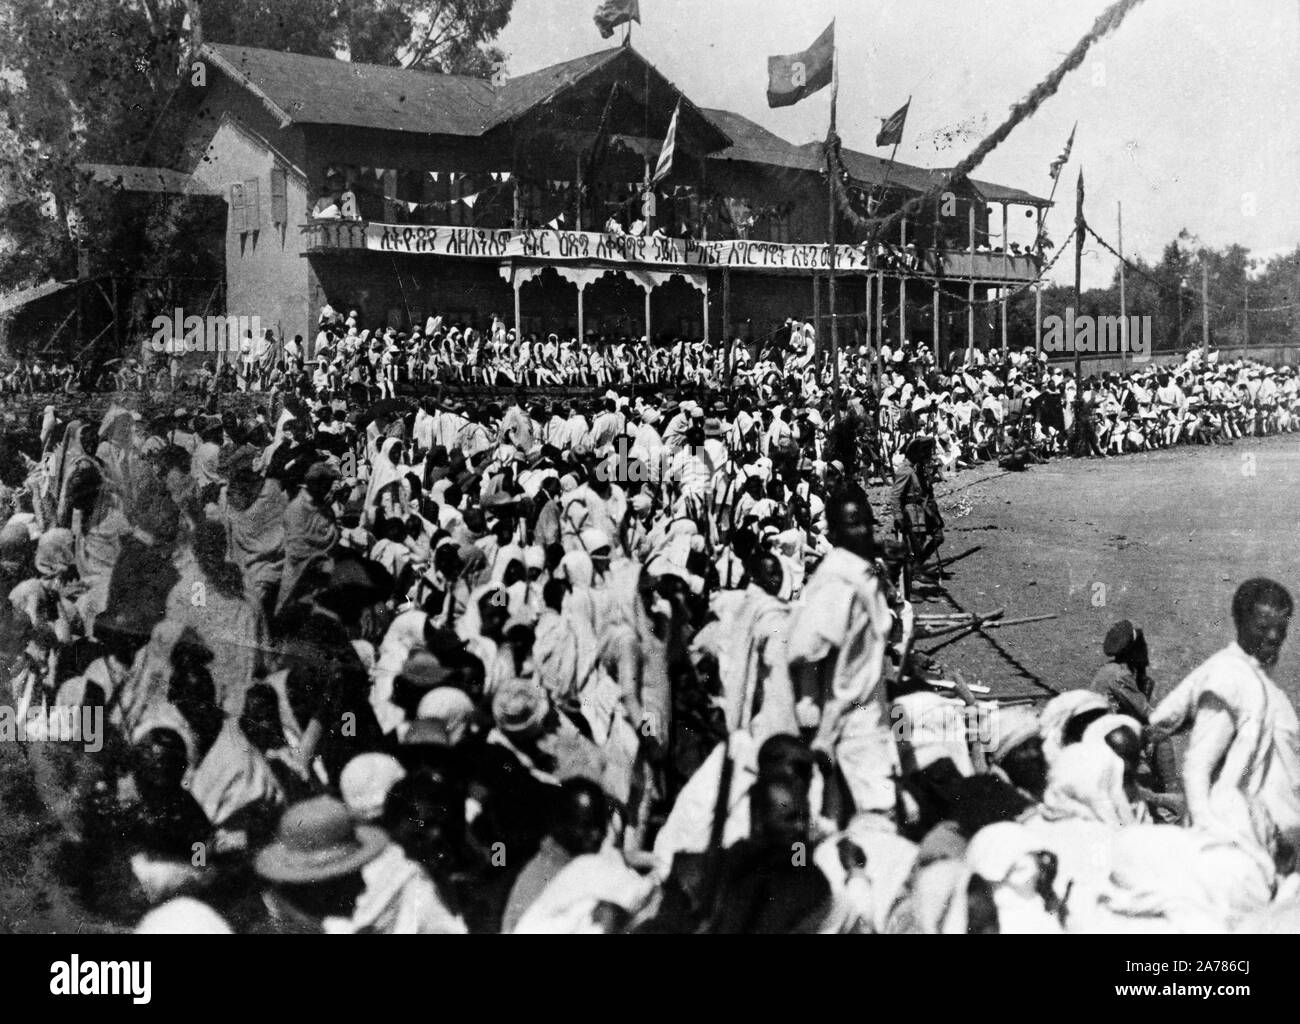 ceremony for the coronation of tafari maconnen, addis abeba, ethiopia 1930 Stock Photo